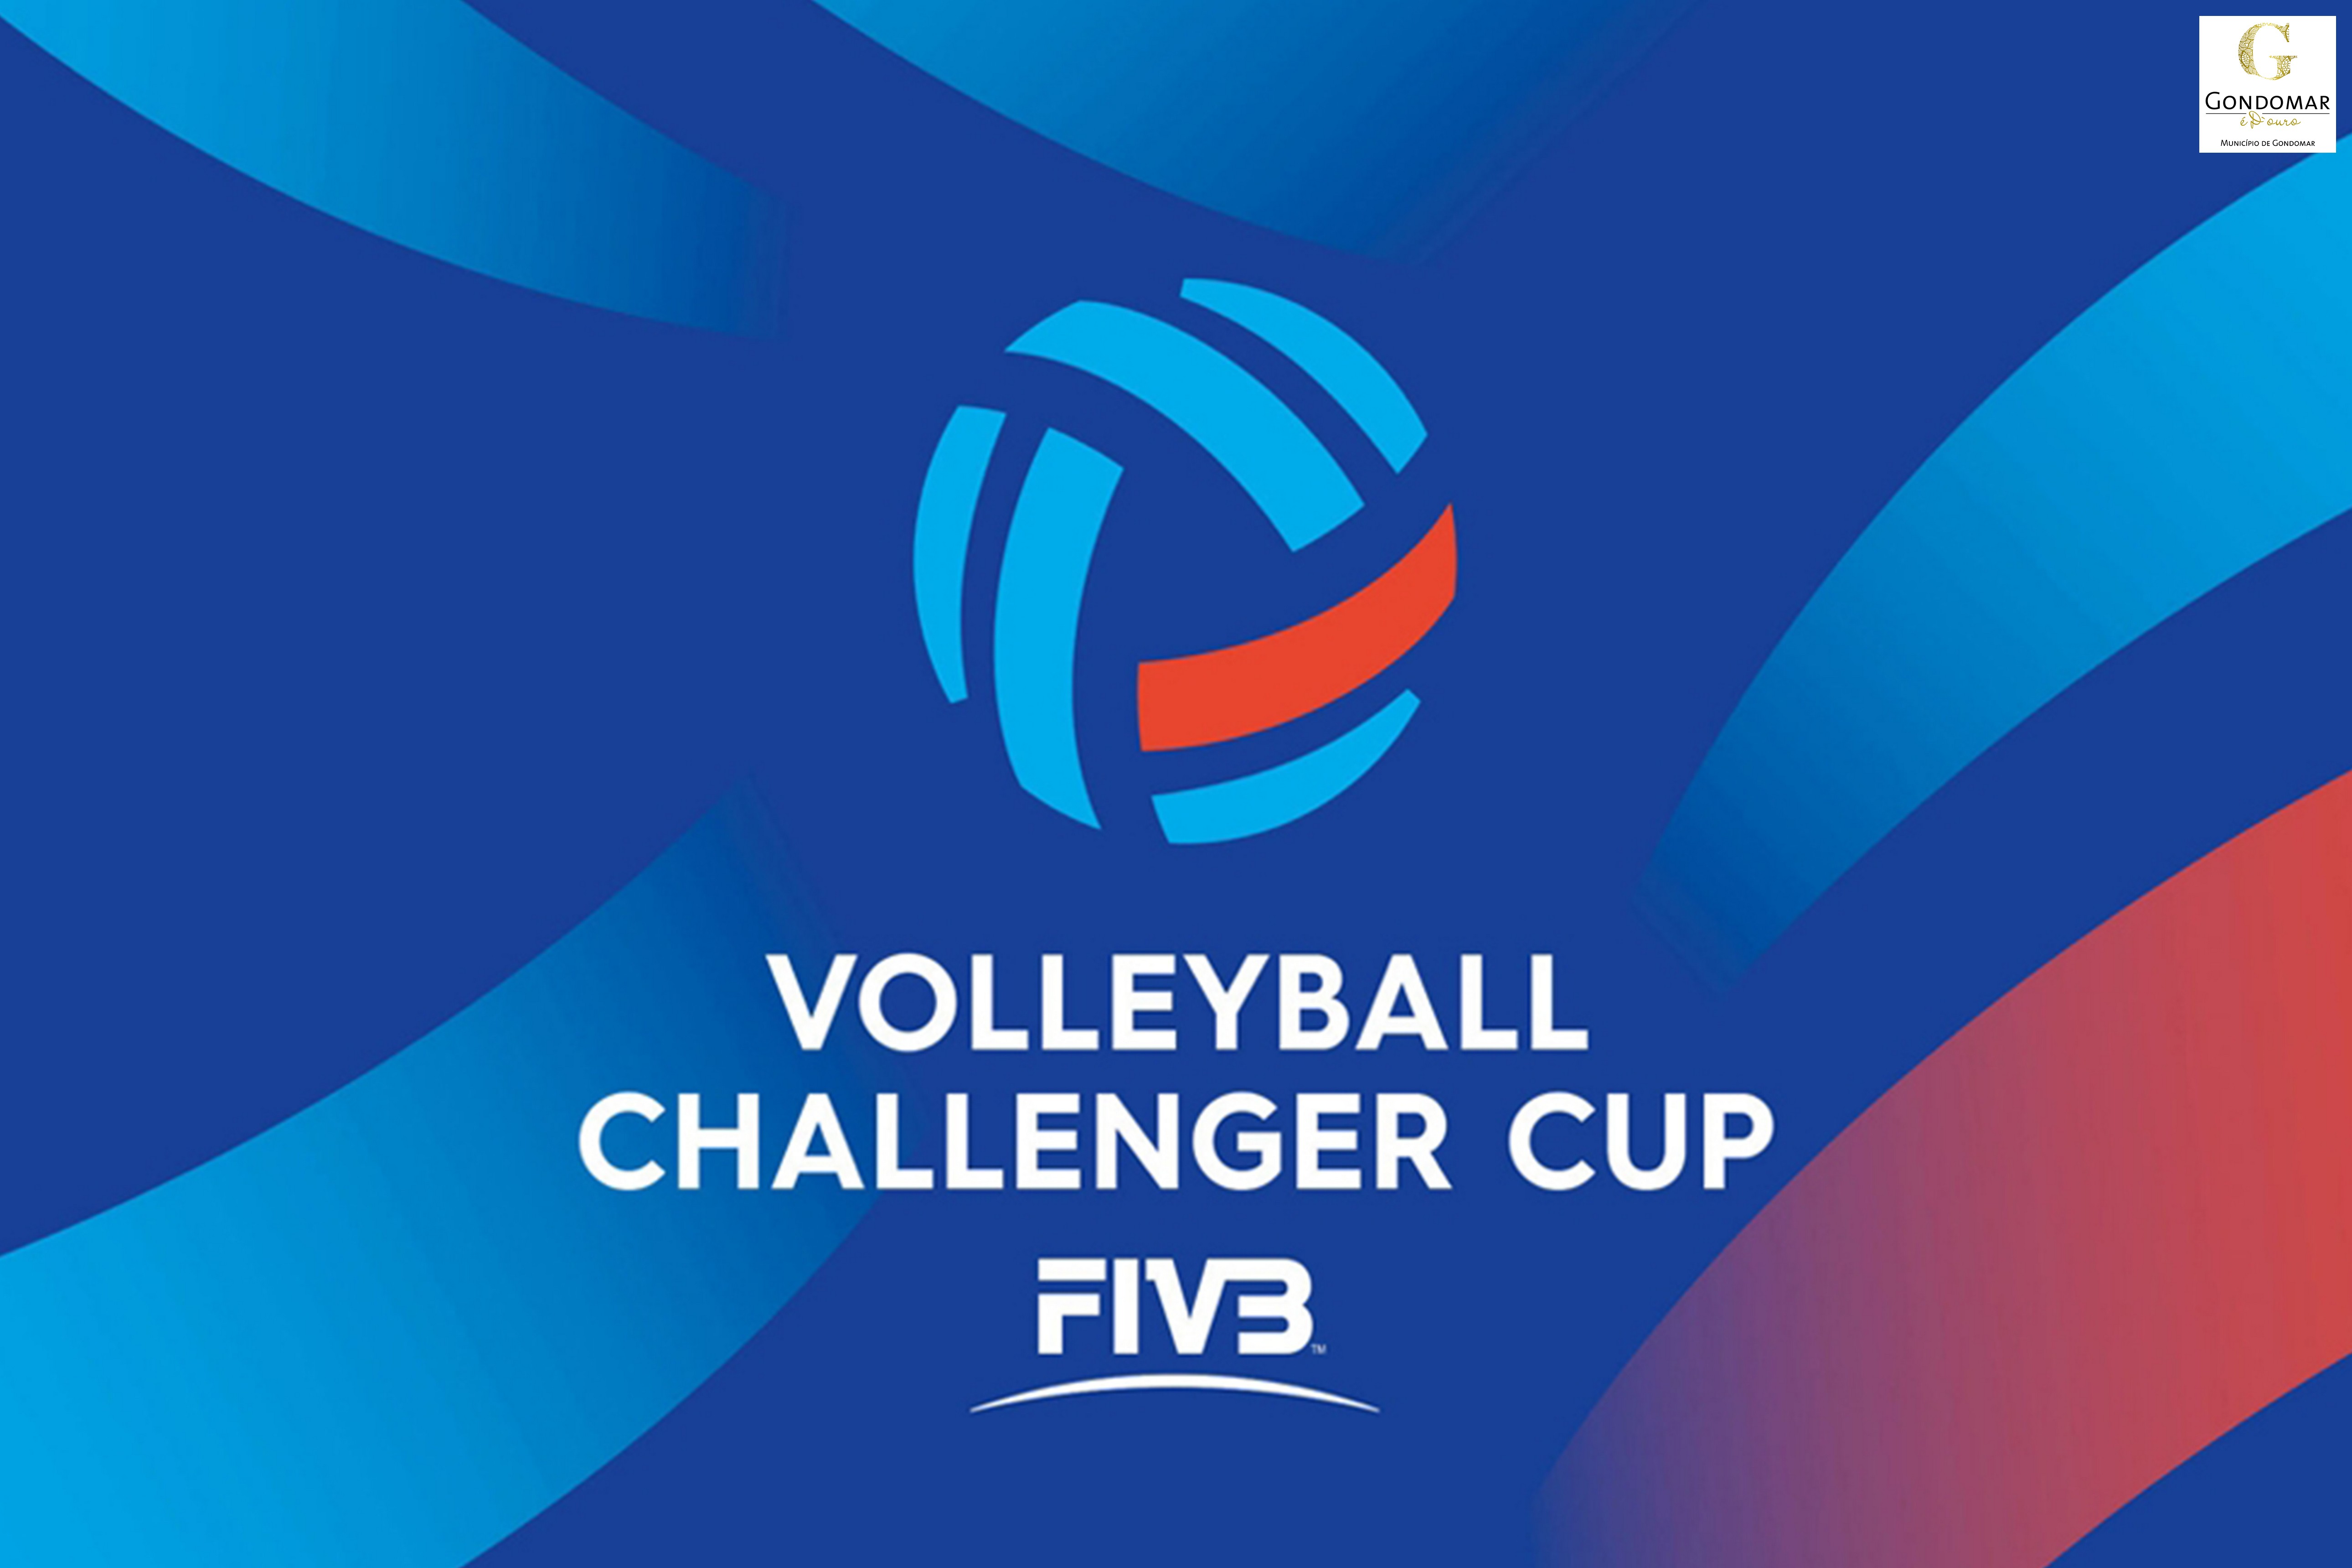 Gondomar recebe Volleyball Challenger Cup 2020